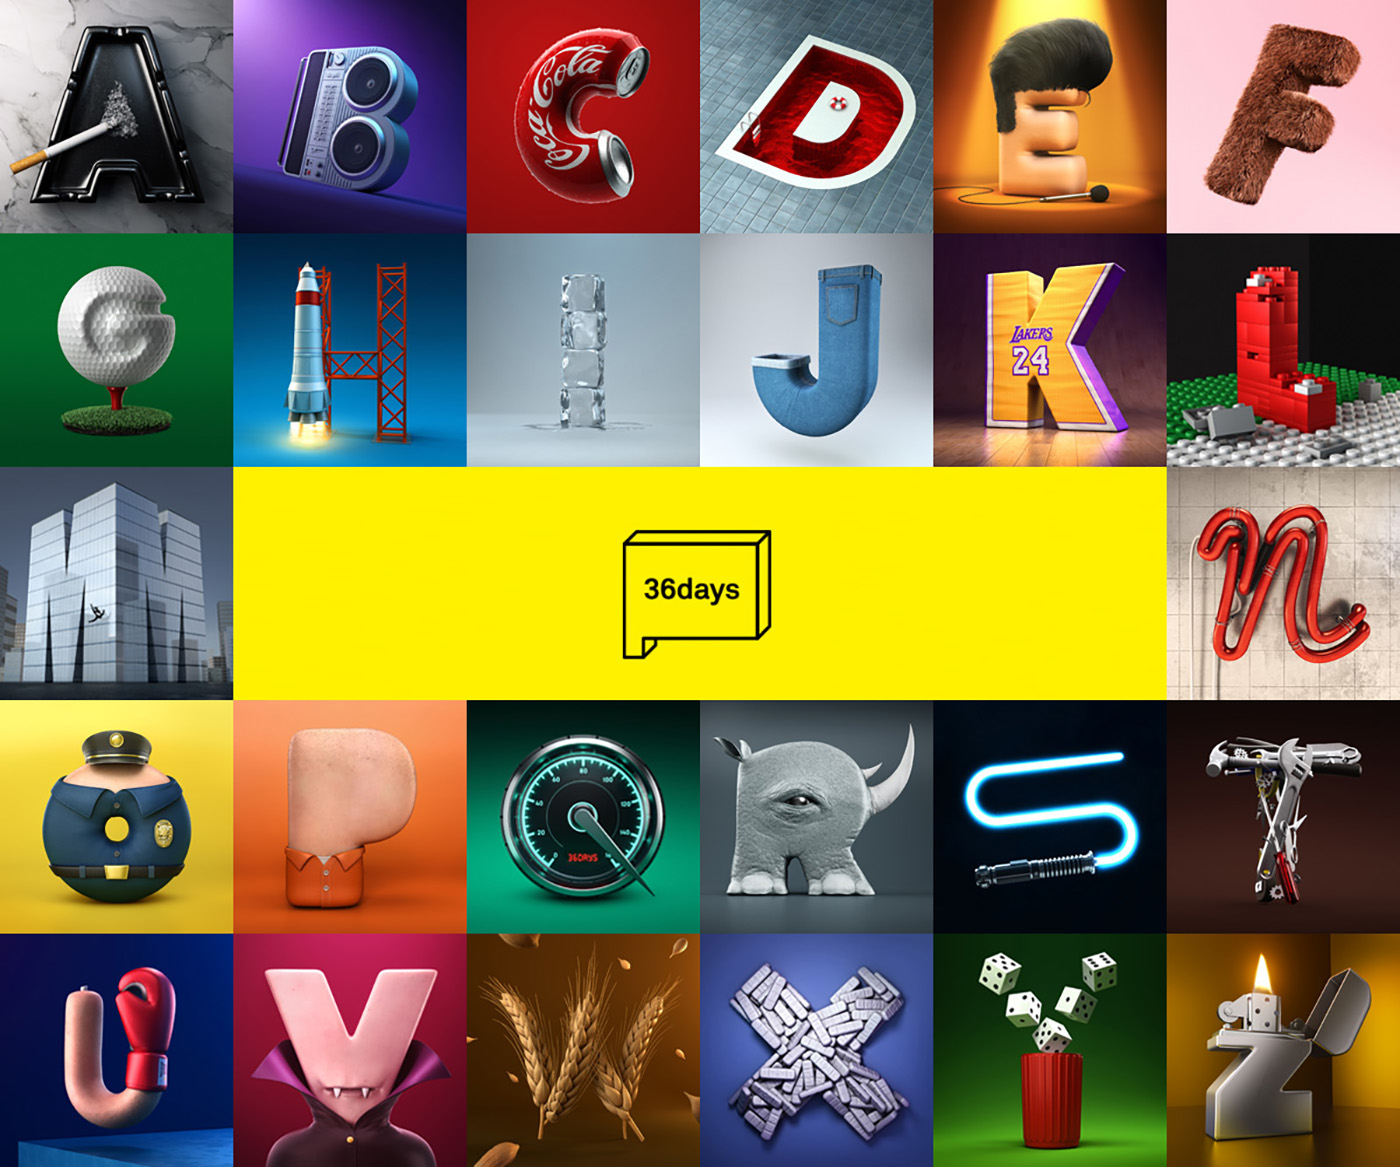 36daysoftype 36days alphabet letters 3D CGI craft ashtray boombox cocacola coke deadpool kobe LEGO neon